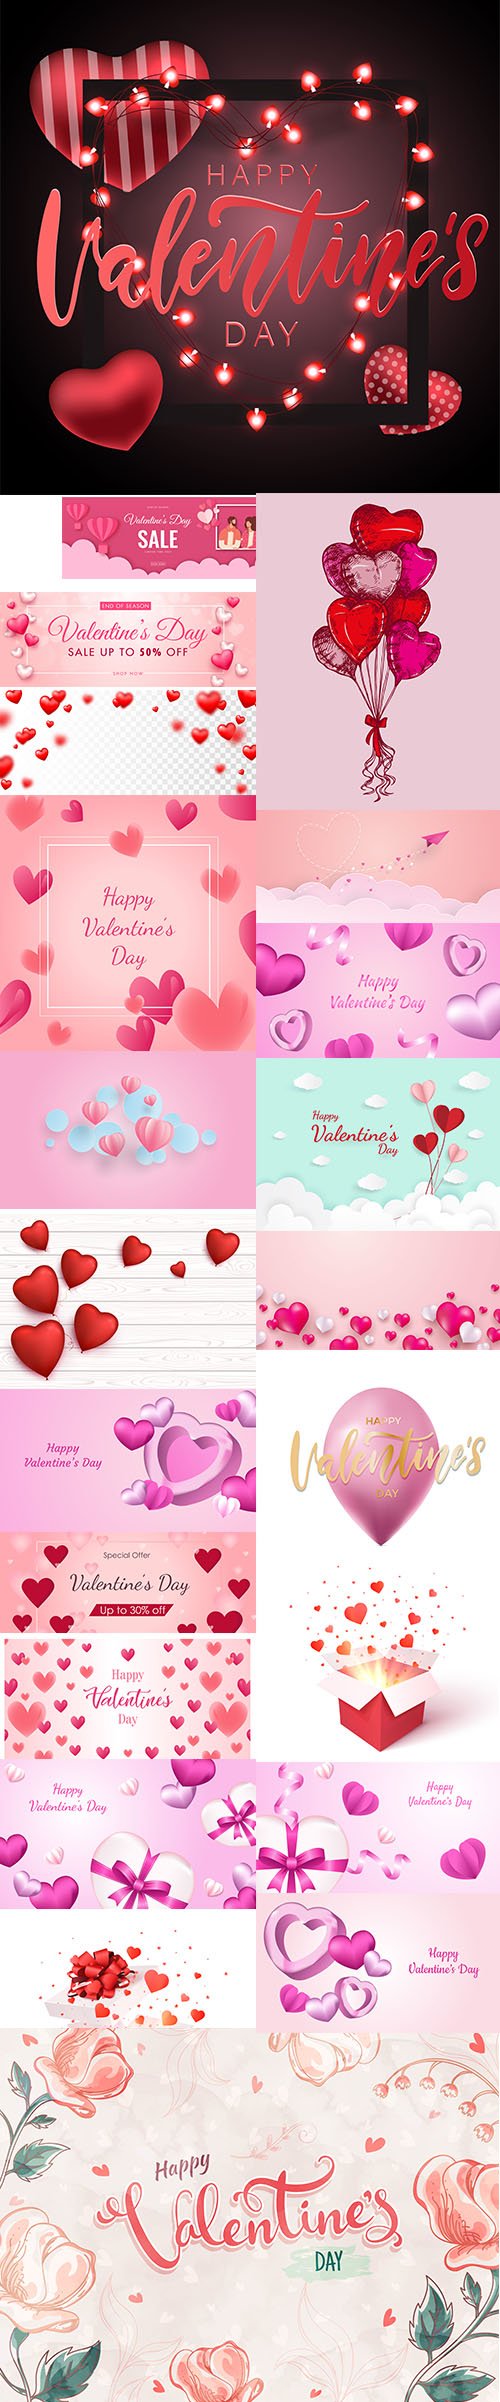 Set of Romantic Valentines Day Illustrations Vol 11